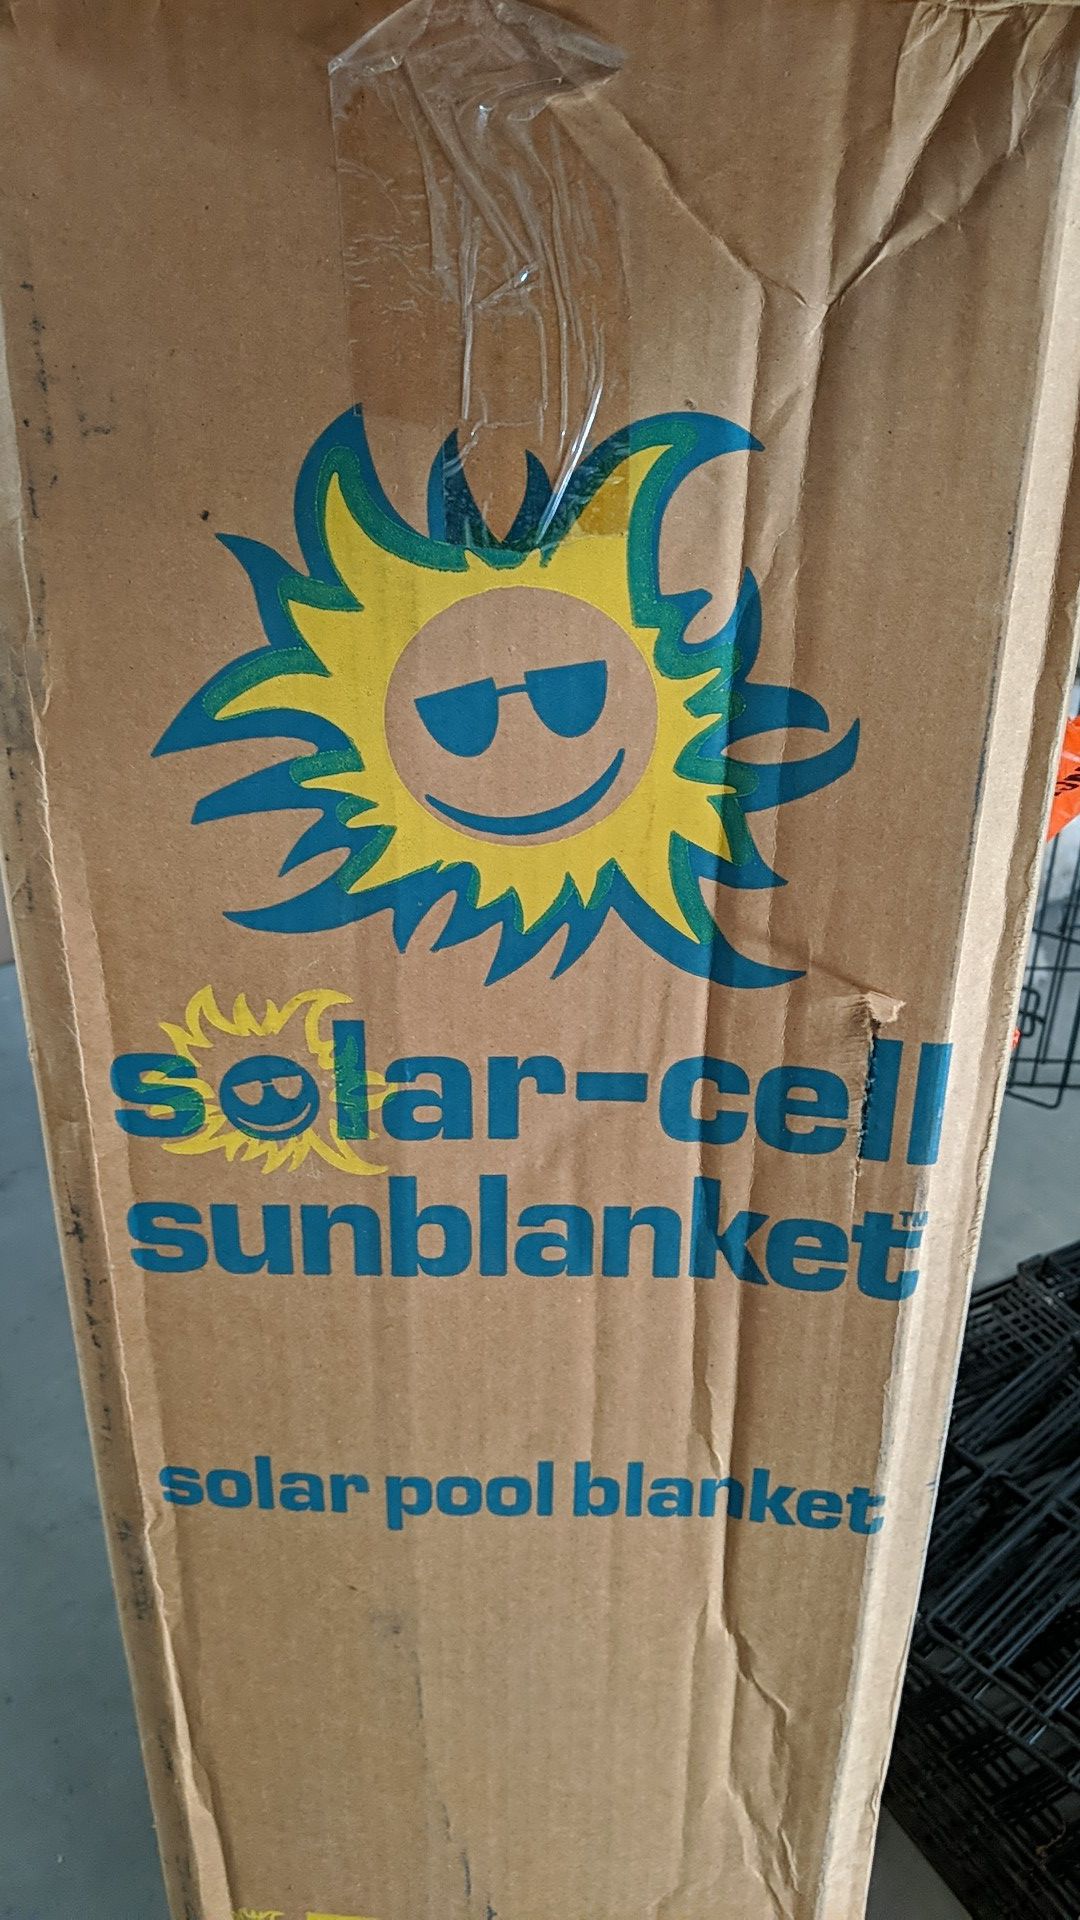 Solar-cell sunblanket, hottub